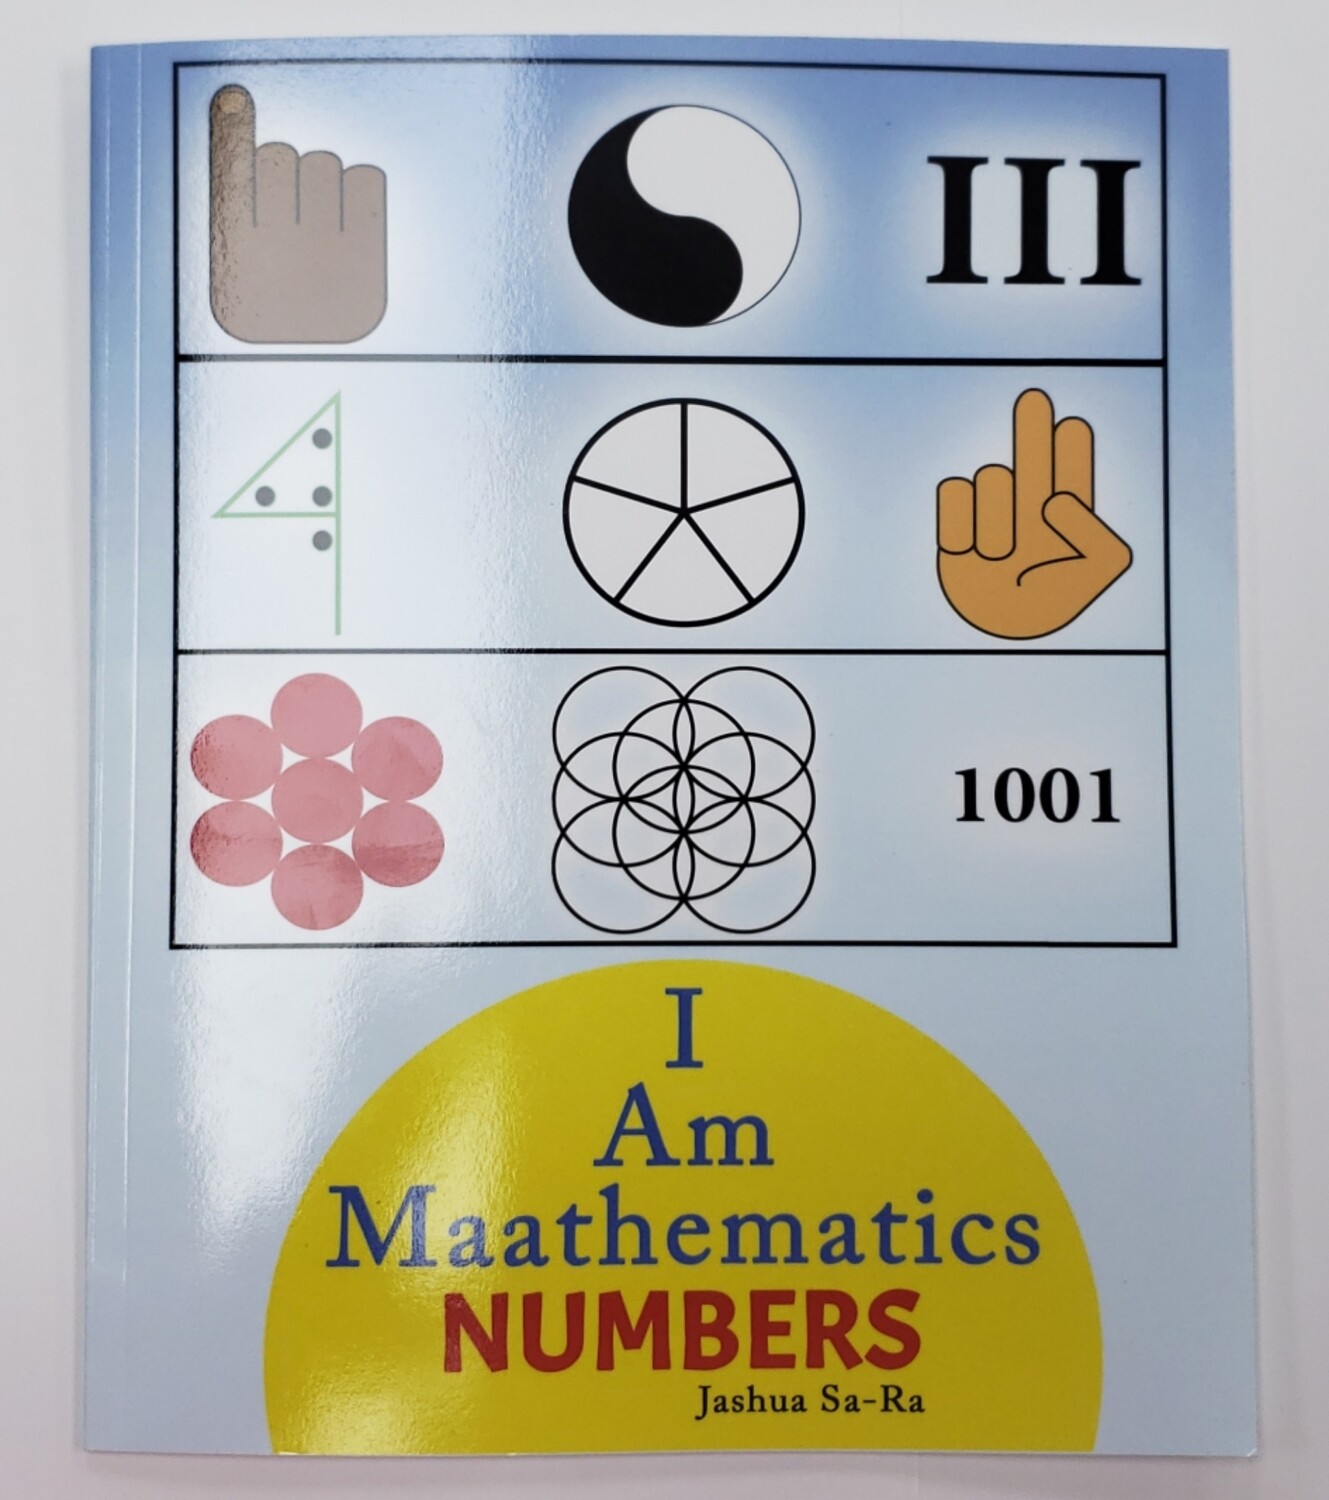 I Am Maathematics Numbers by Jashua Sa-Ra (@earthiopian)